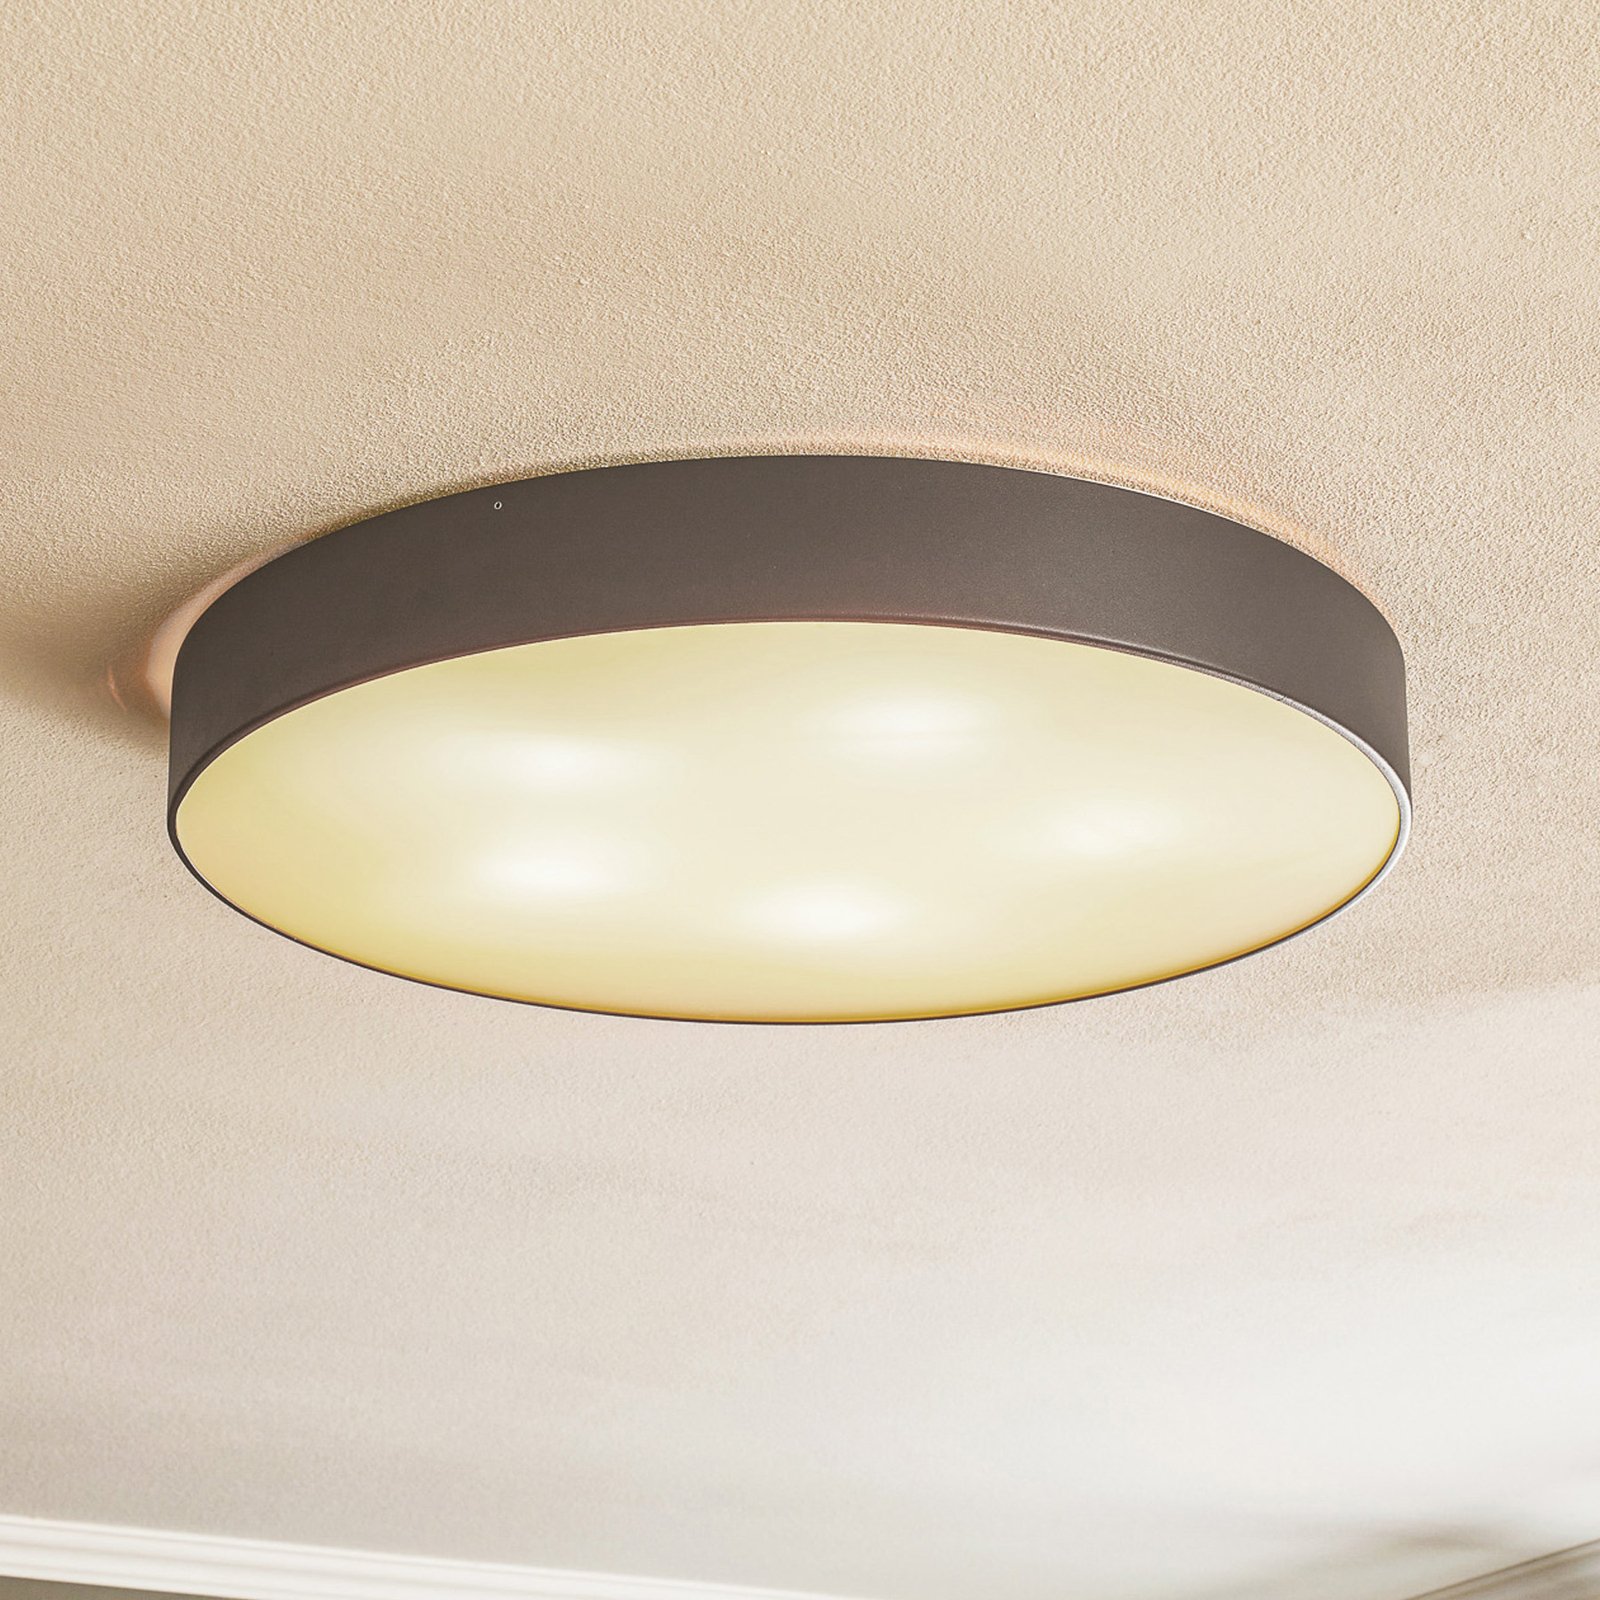 Dayton ceiling light in grey Ø 60 cm